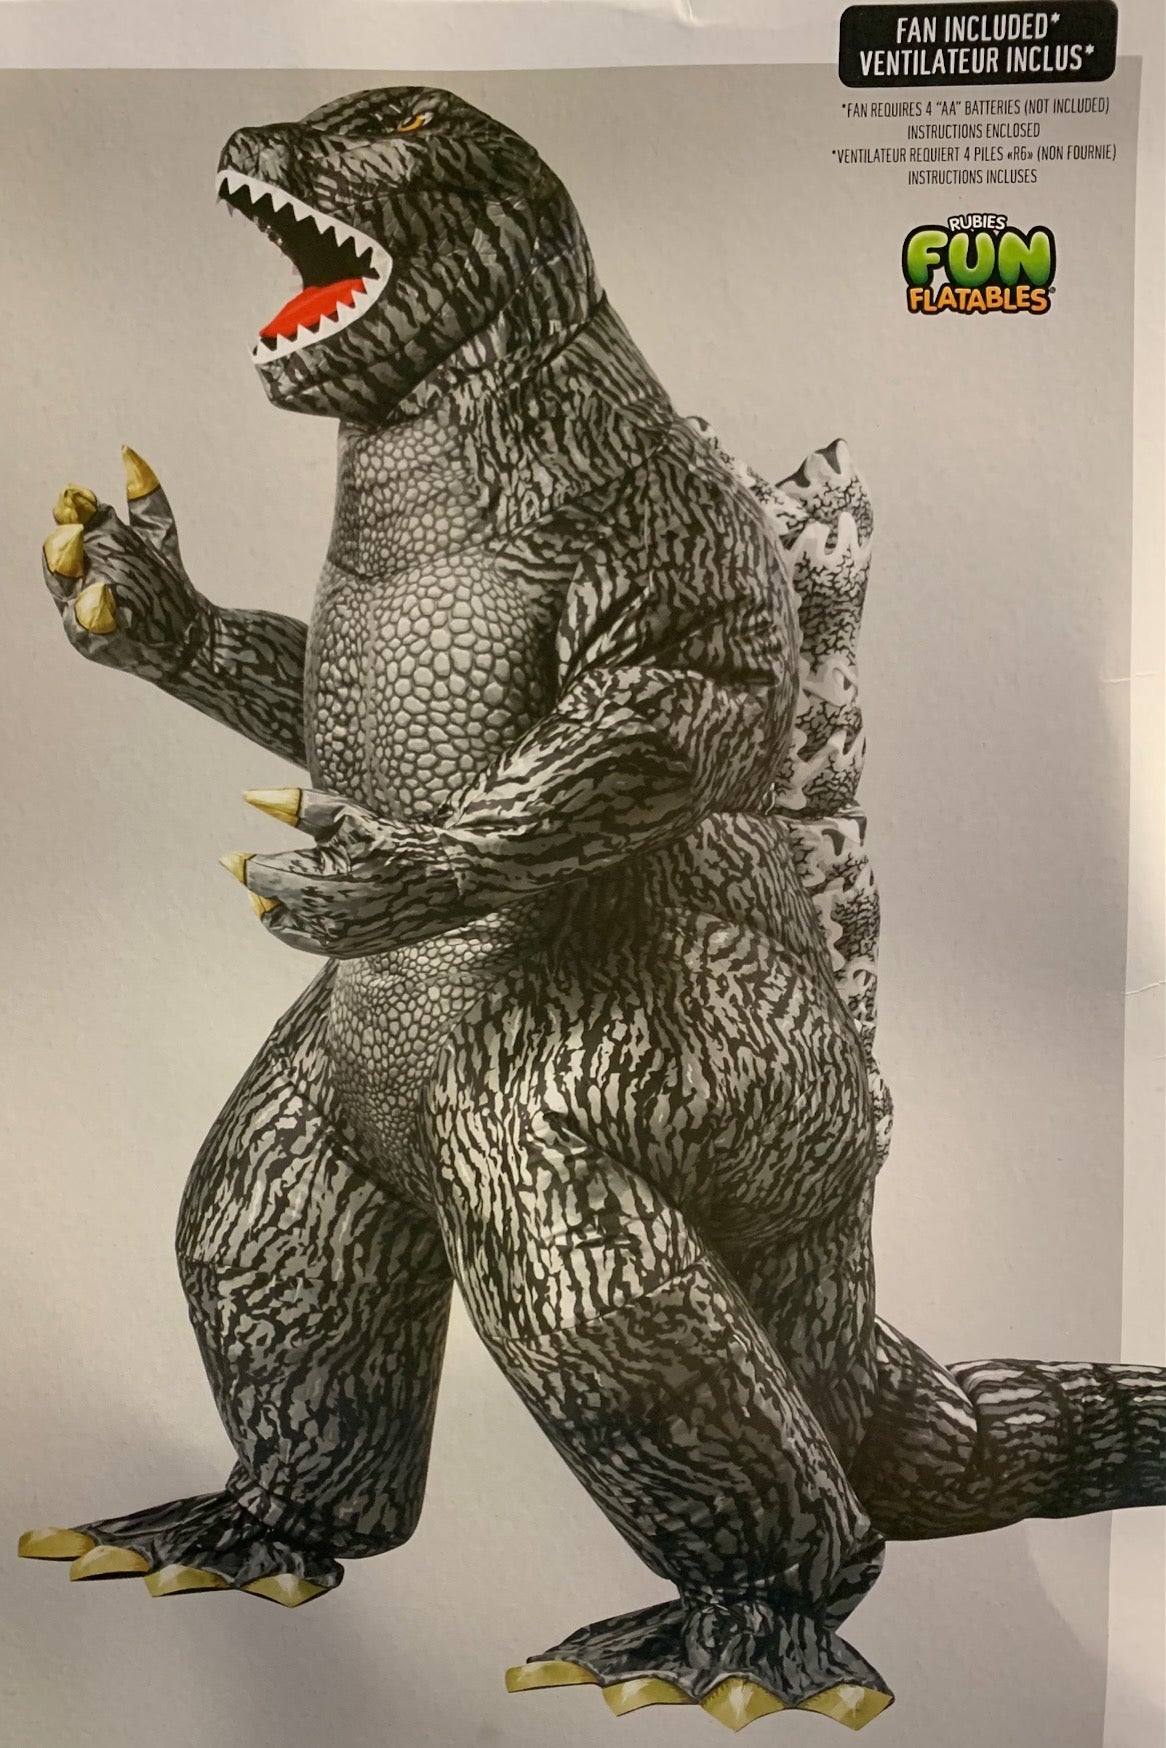 Deluxe Adult Godzilla Inflatable Costume